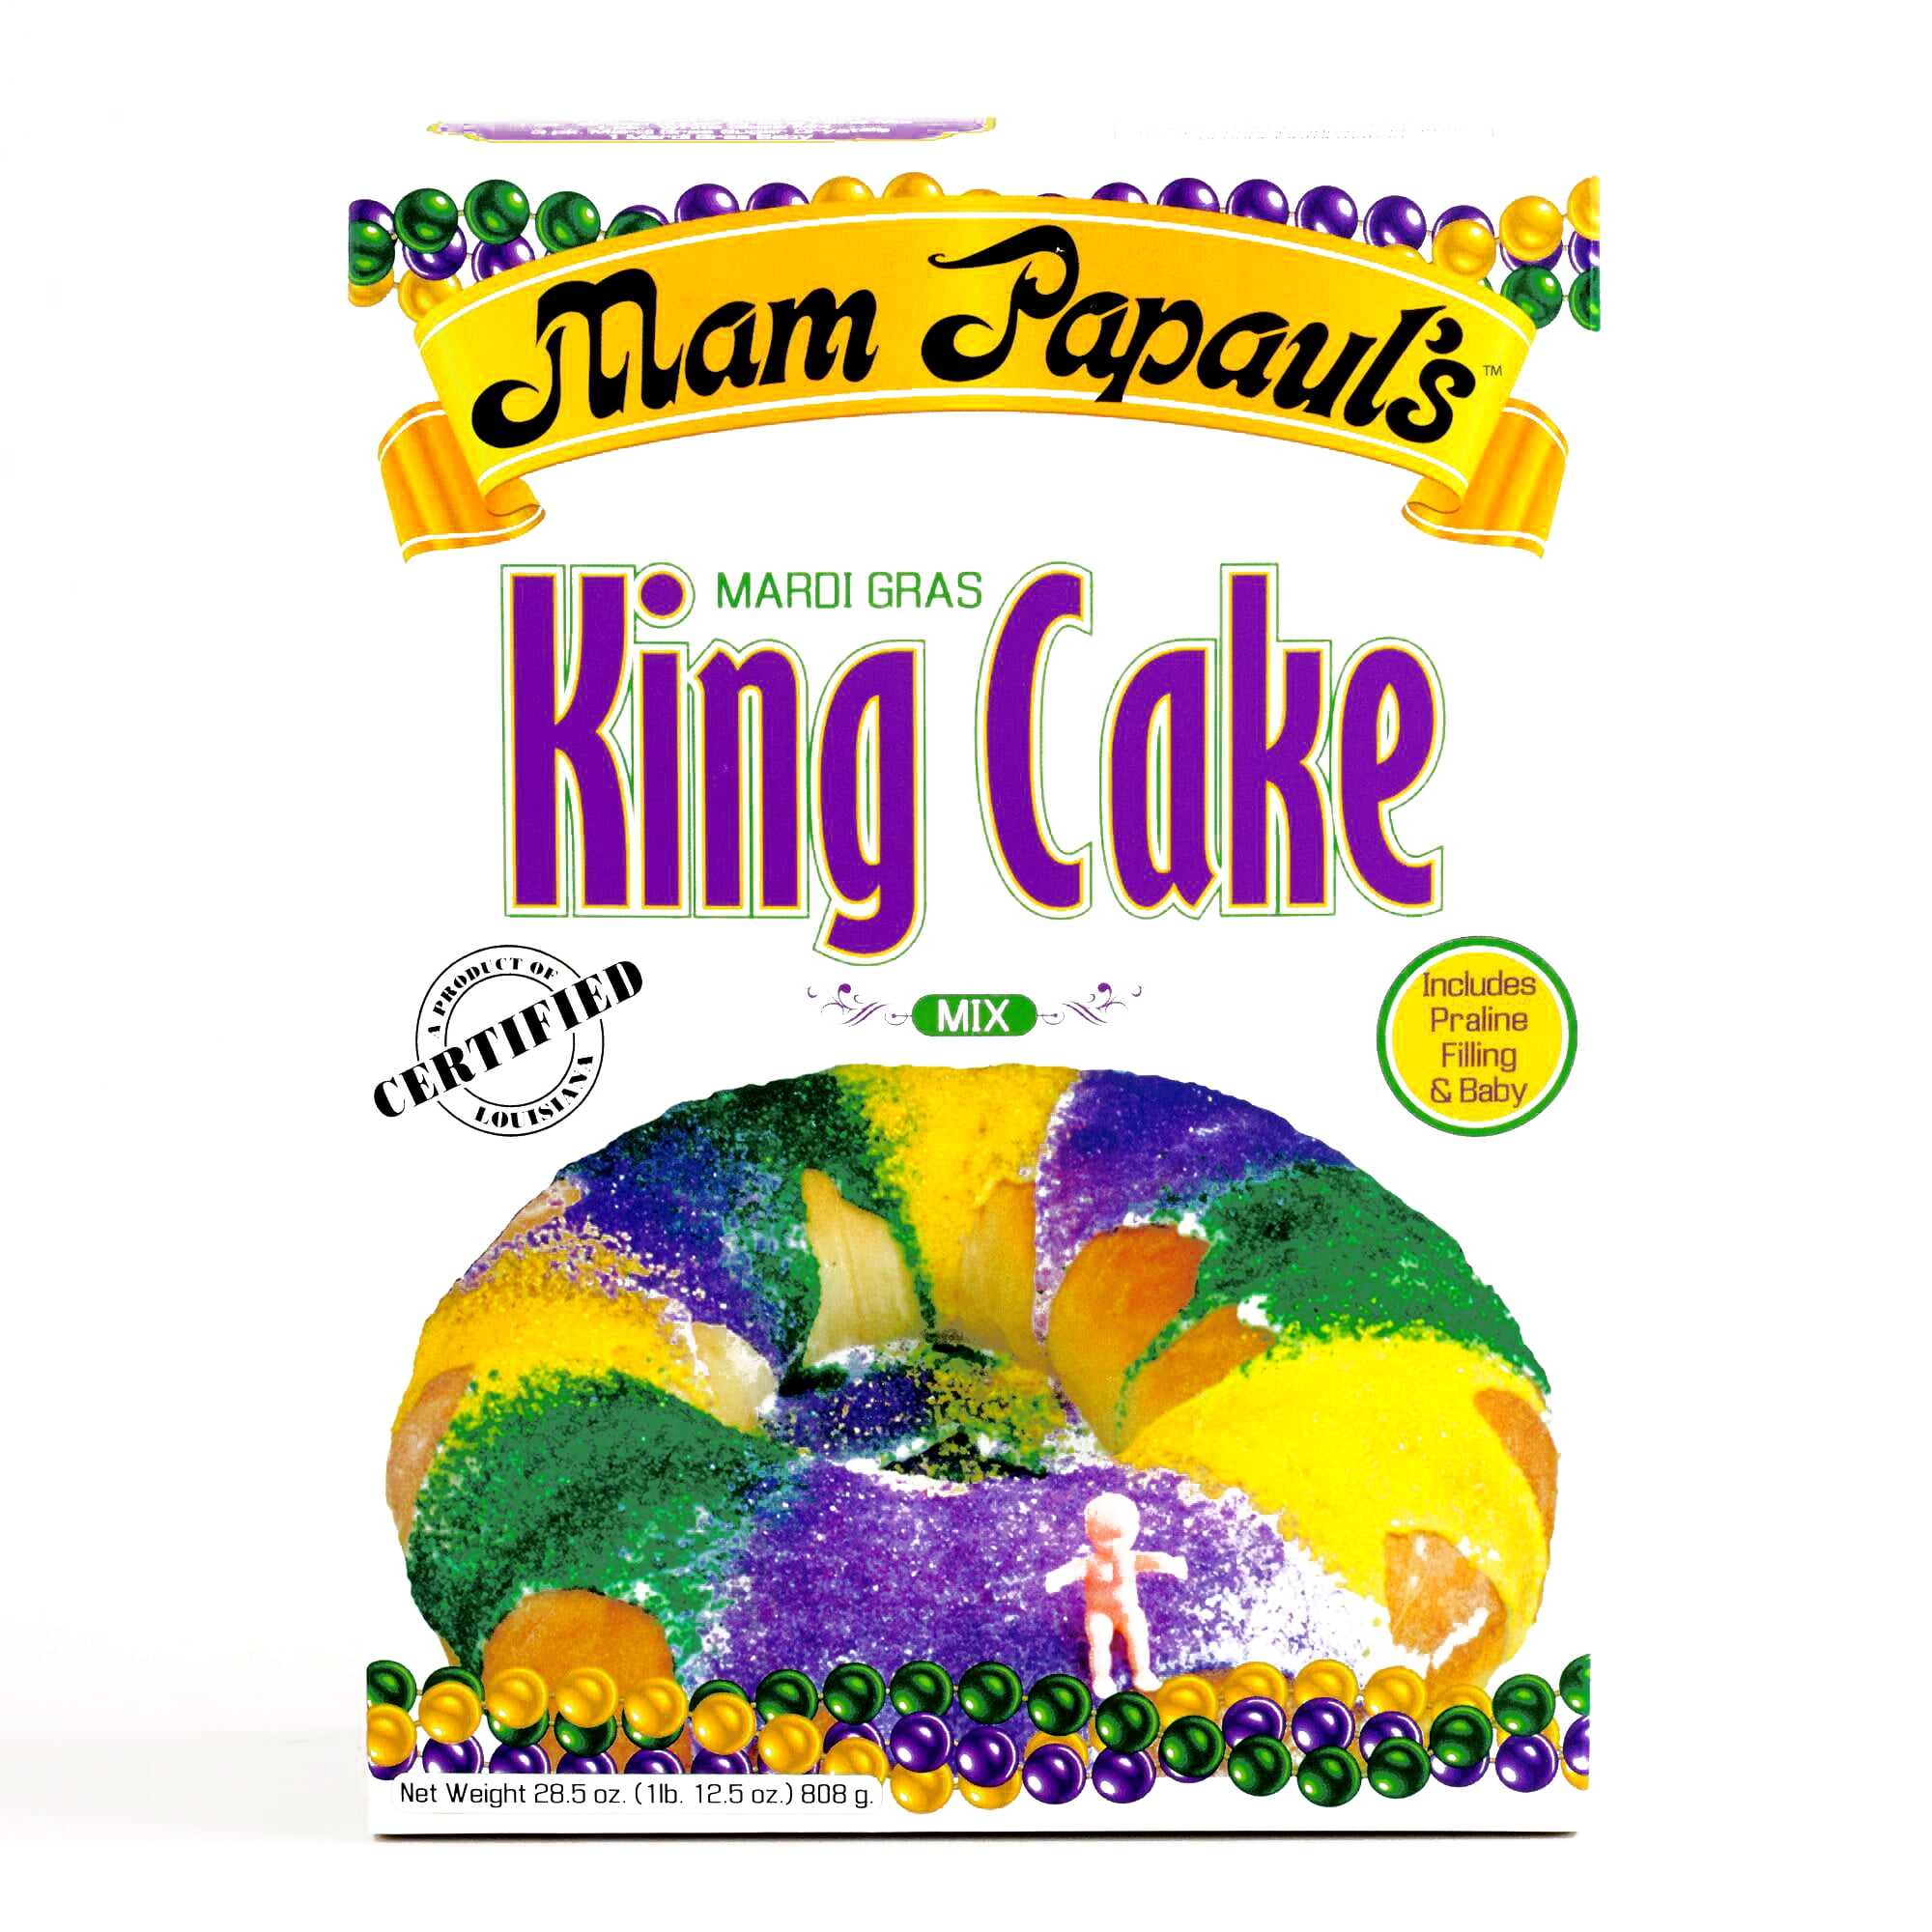 King cake Mardi Gras wreath